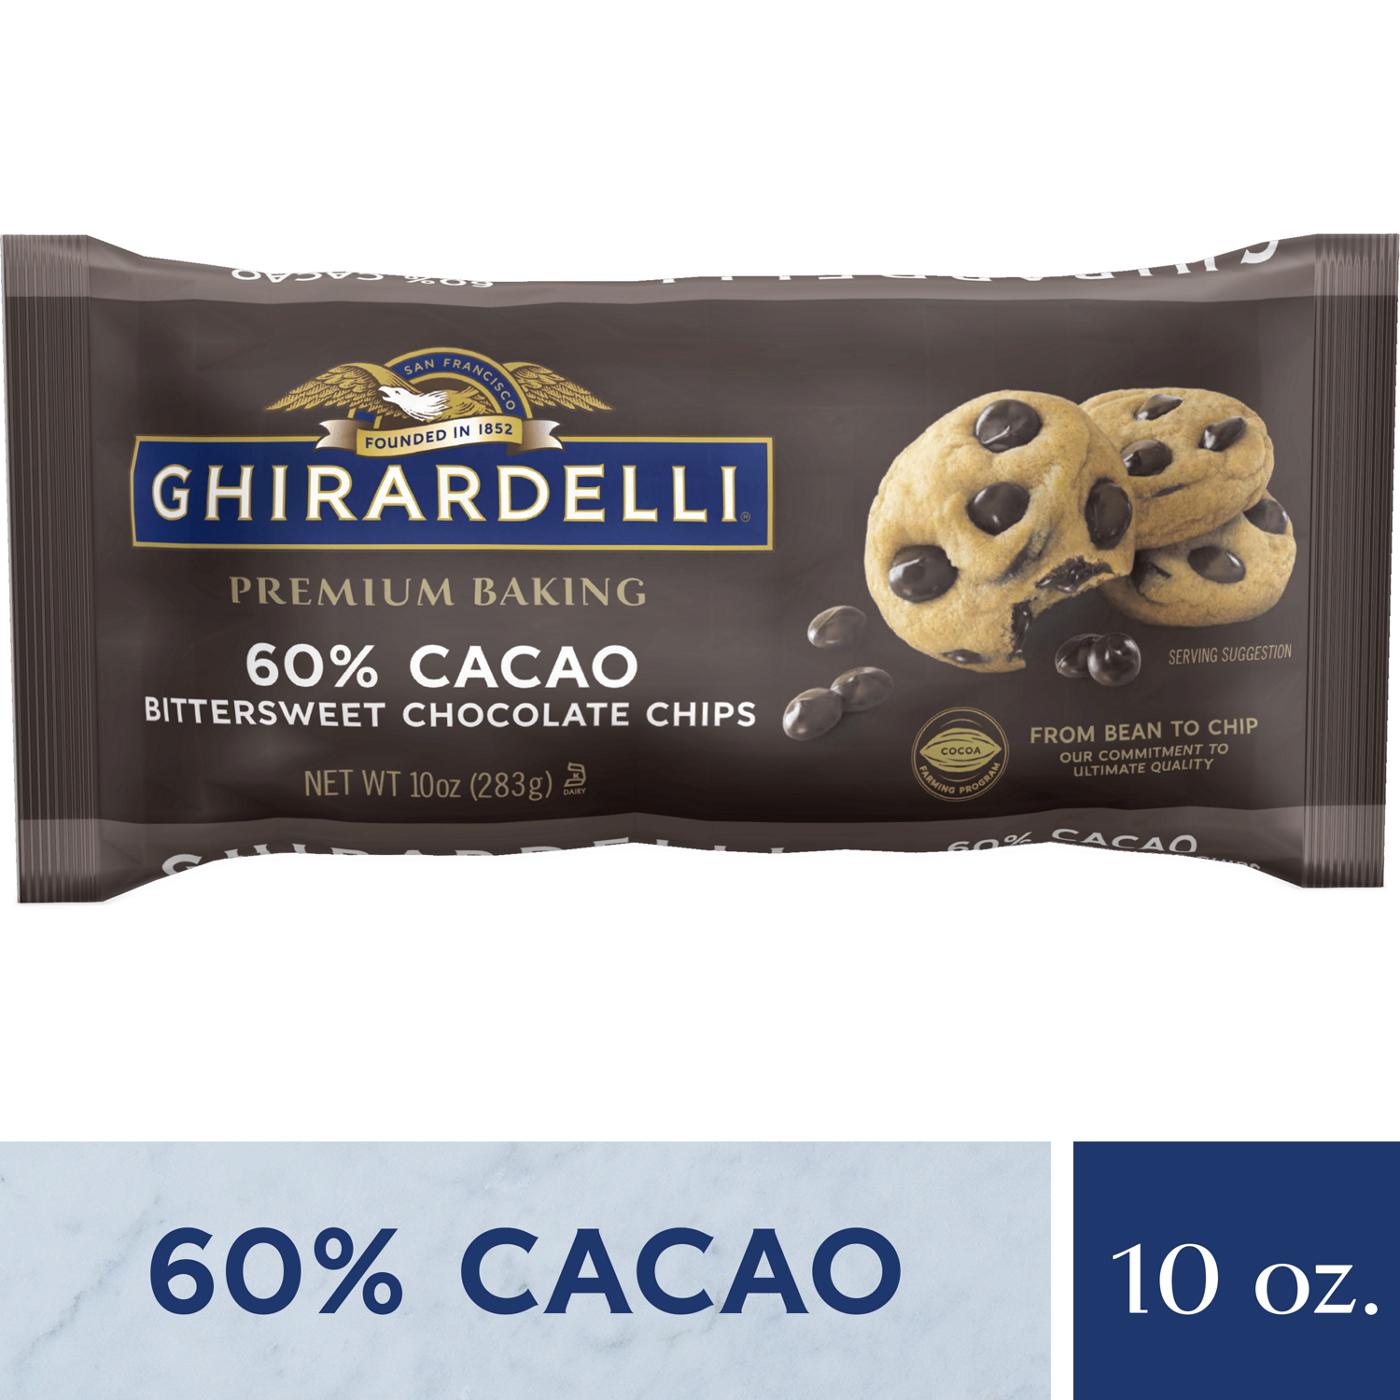 Ghirardelli 60% Cacao Bittersweet Chocolate Premium Baking Chips; image 6 of 7